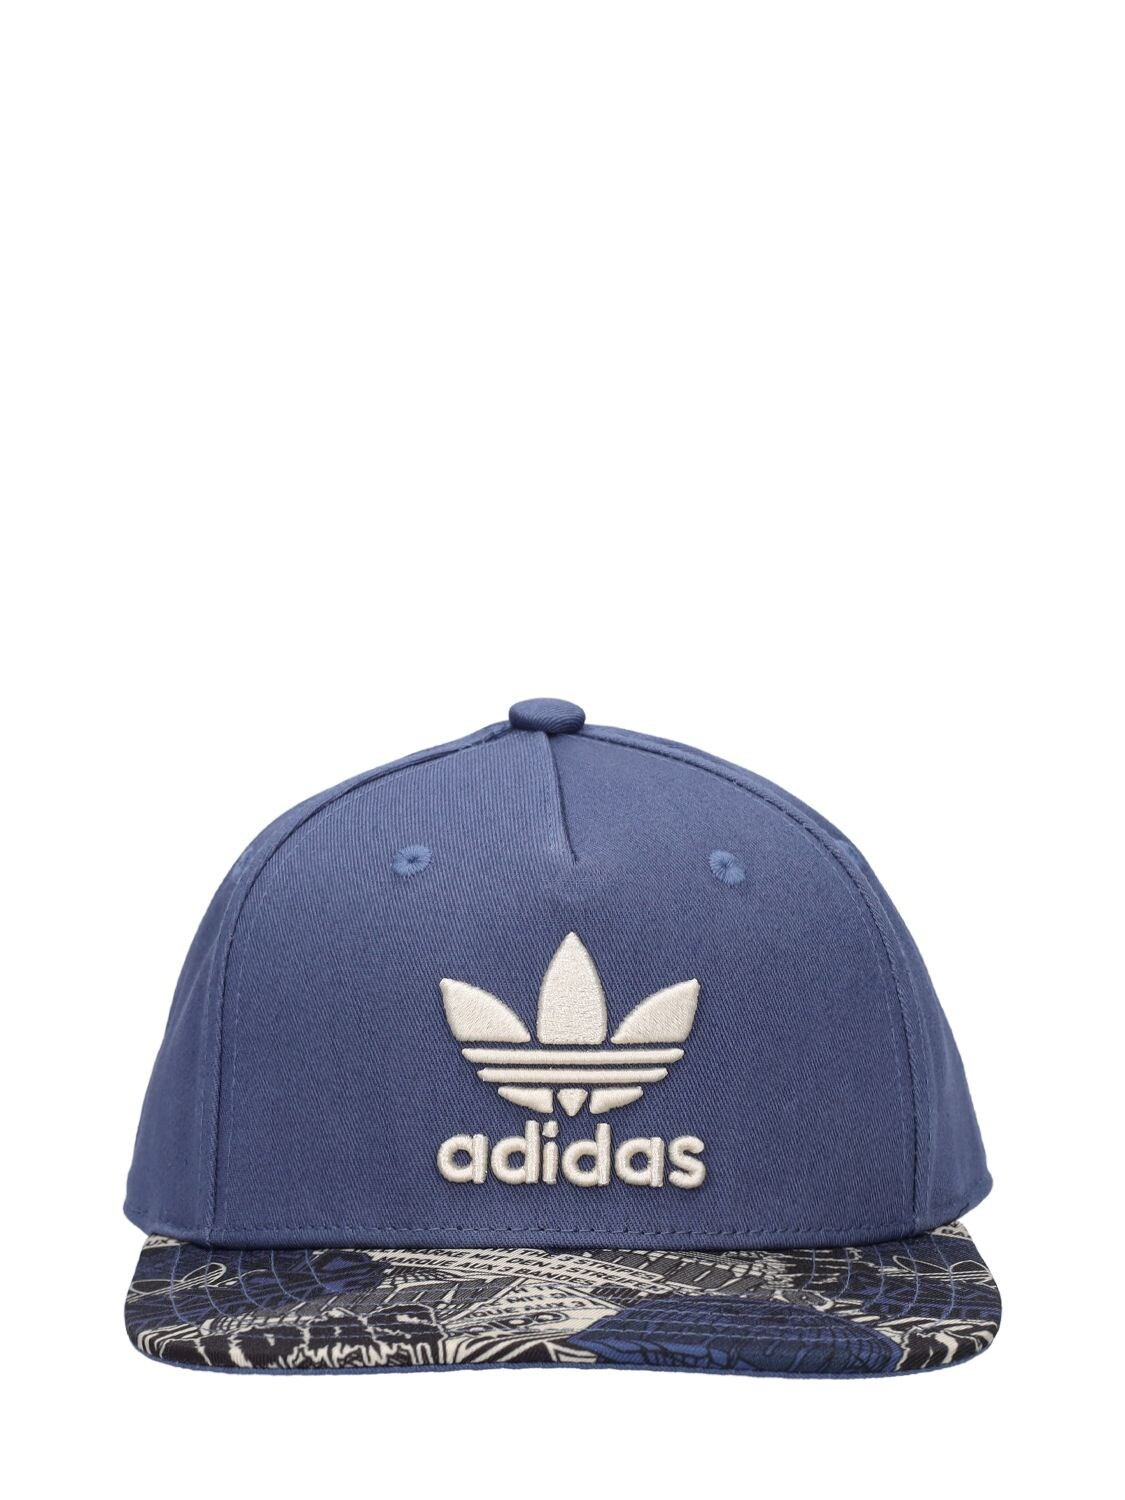 Adidas Originals Kids' Embroidered Recycled Nylon Baseball Cap In Dark Blue